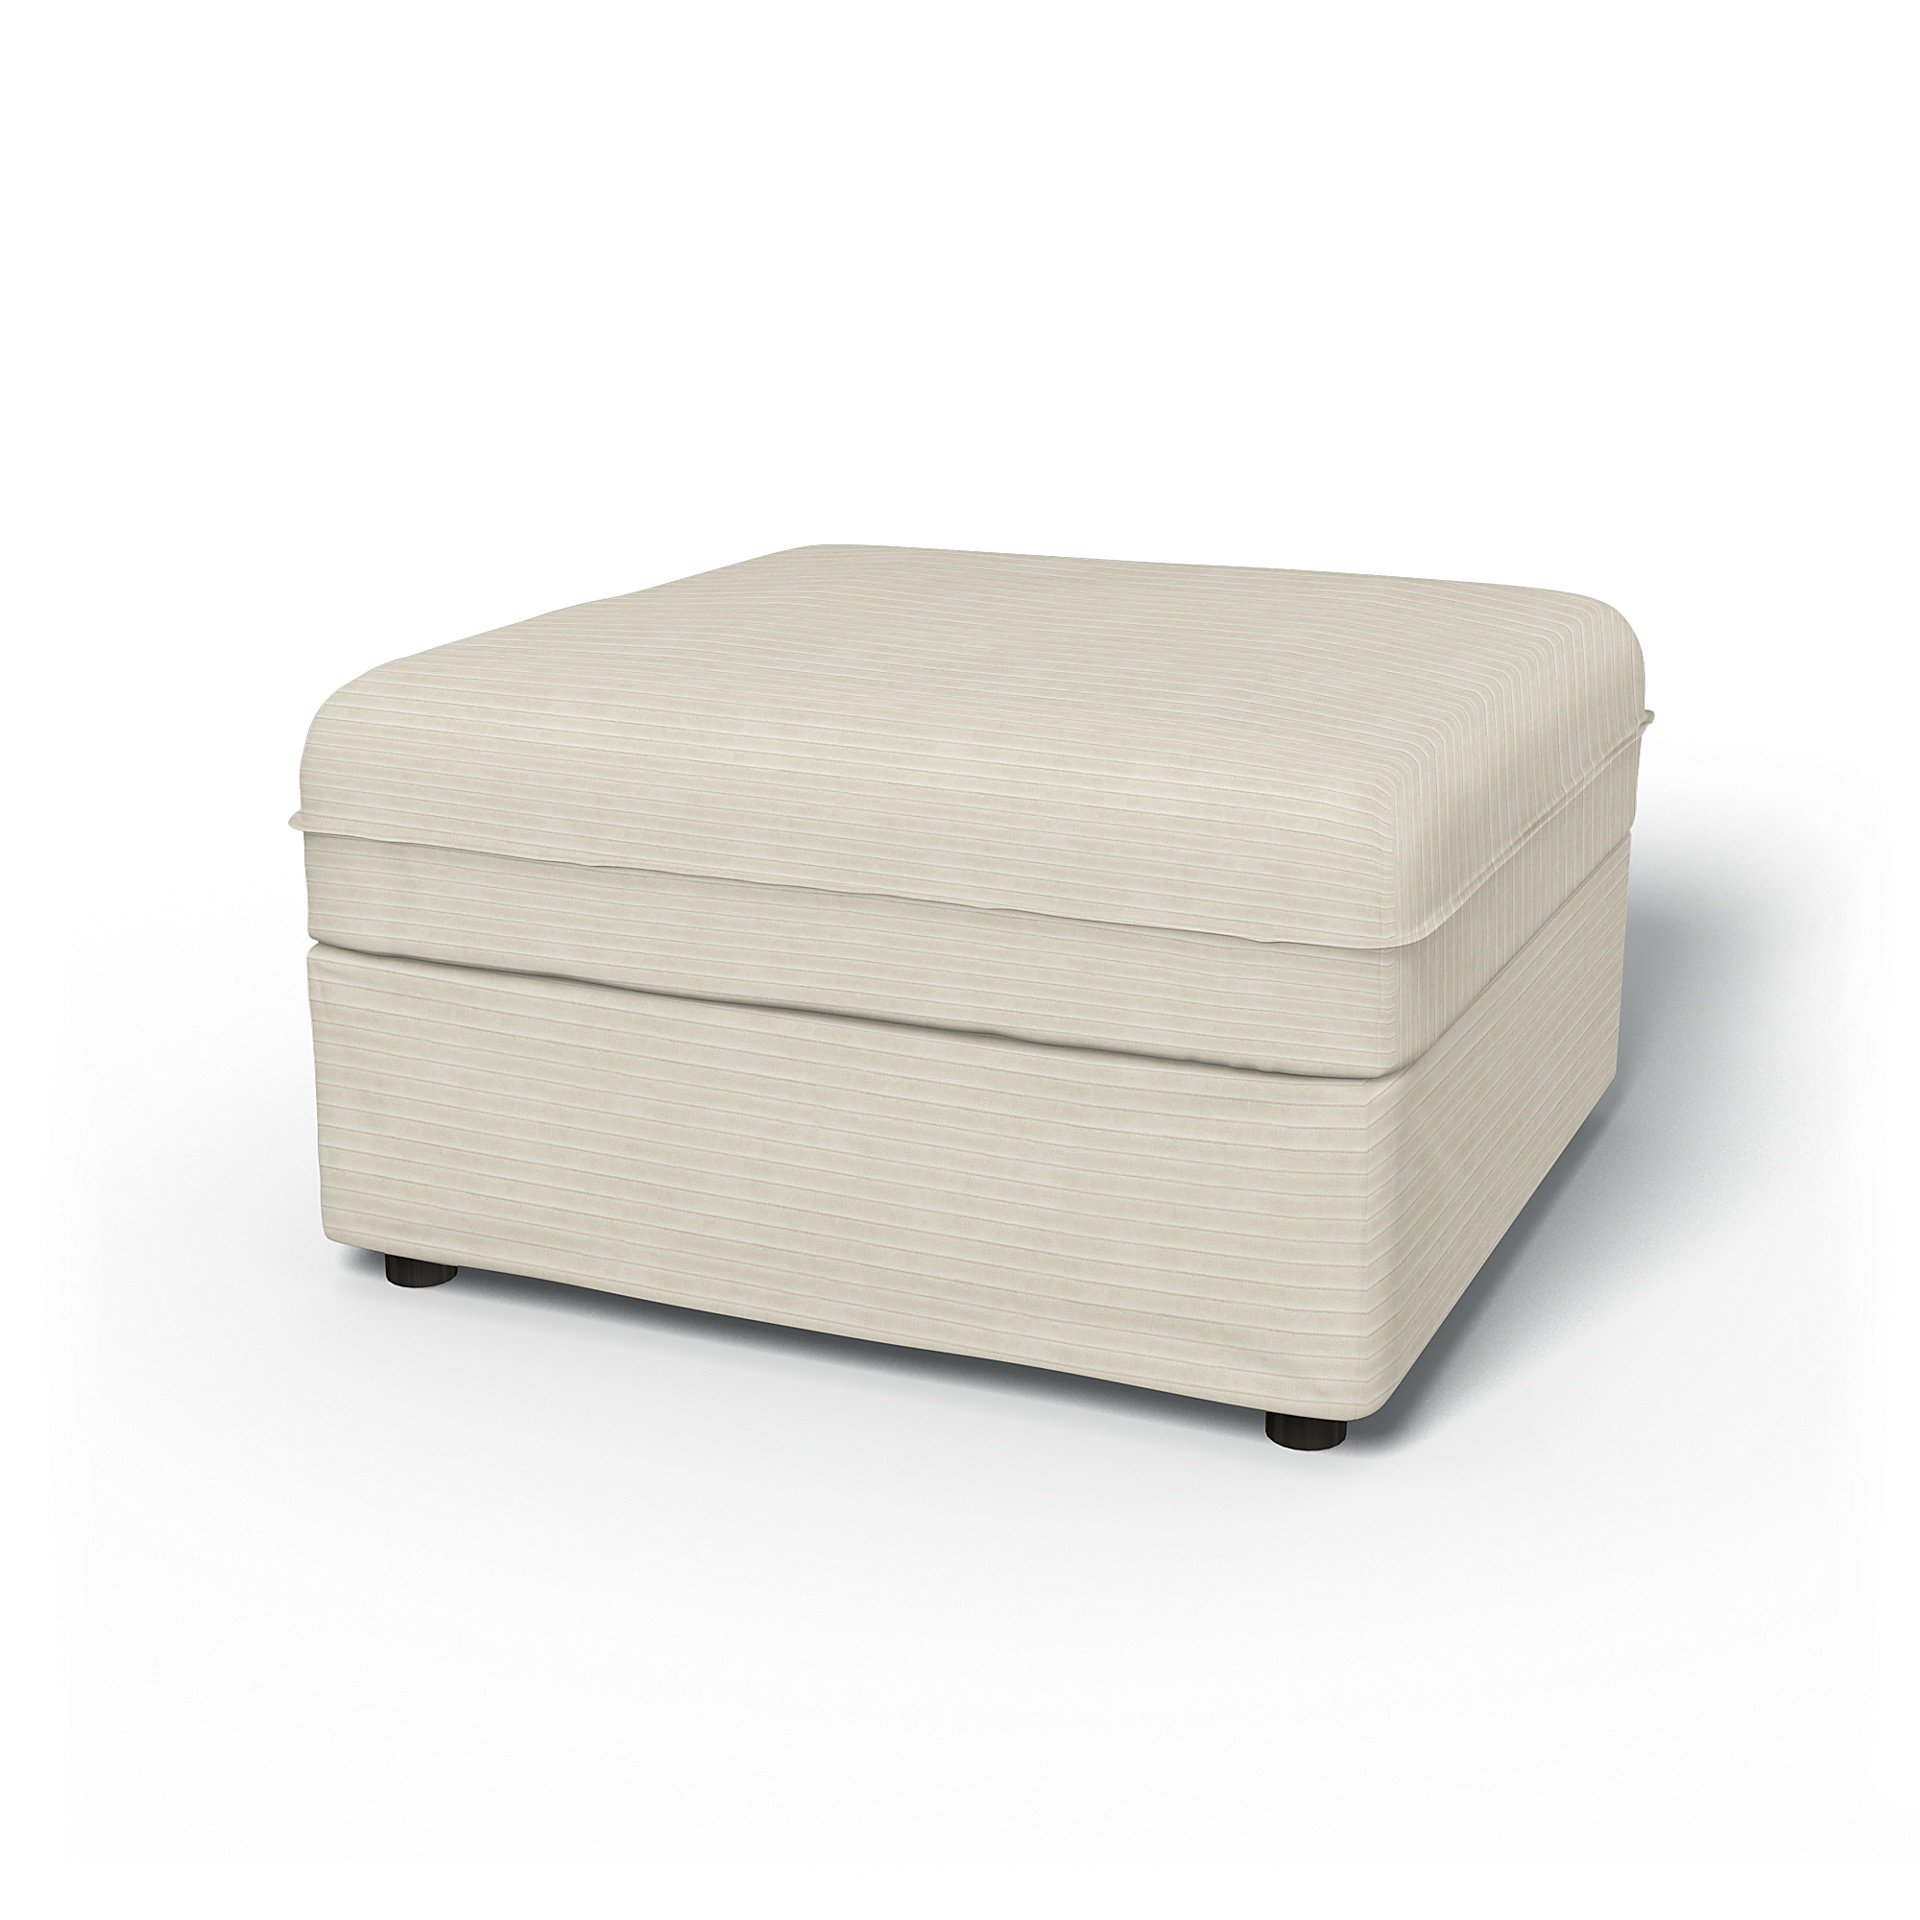 IKEA - Vallentuna Seat Module with Storage Cover 80x80cm 32x32in, Tofu, Corduroy - Bemz